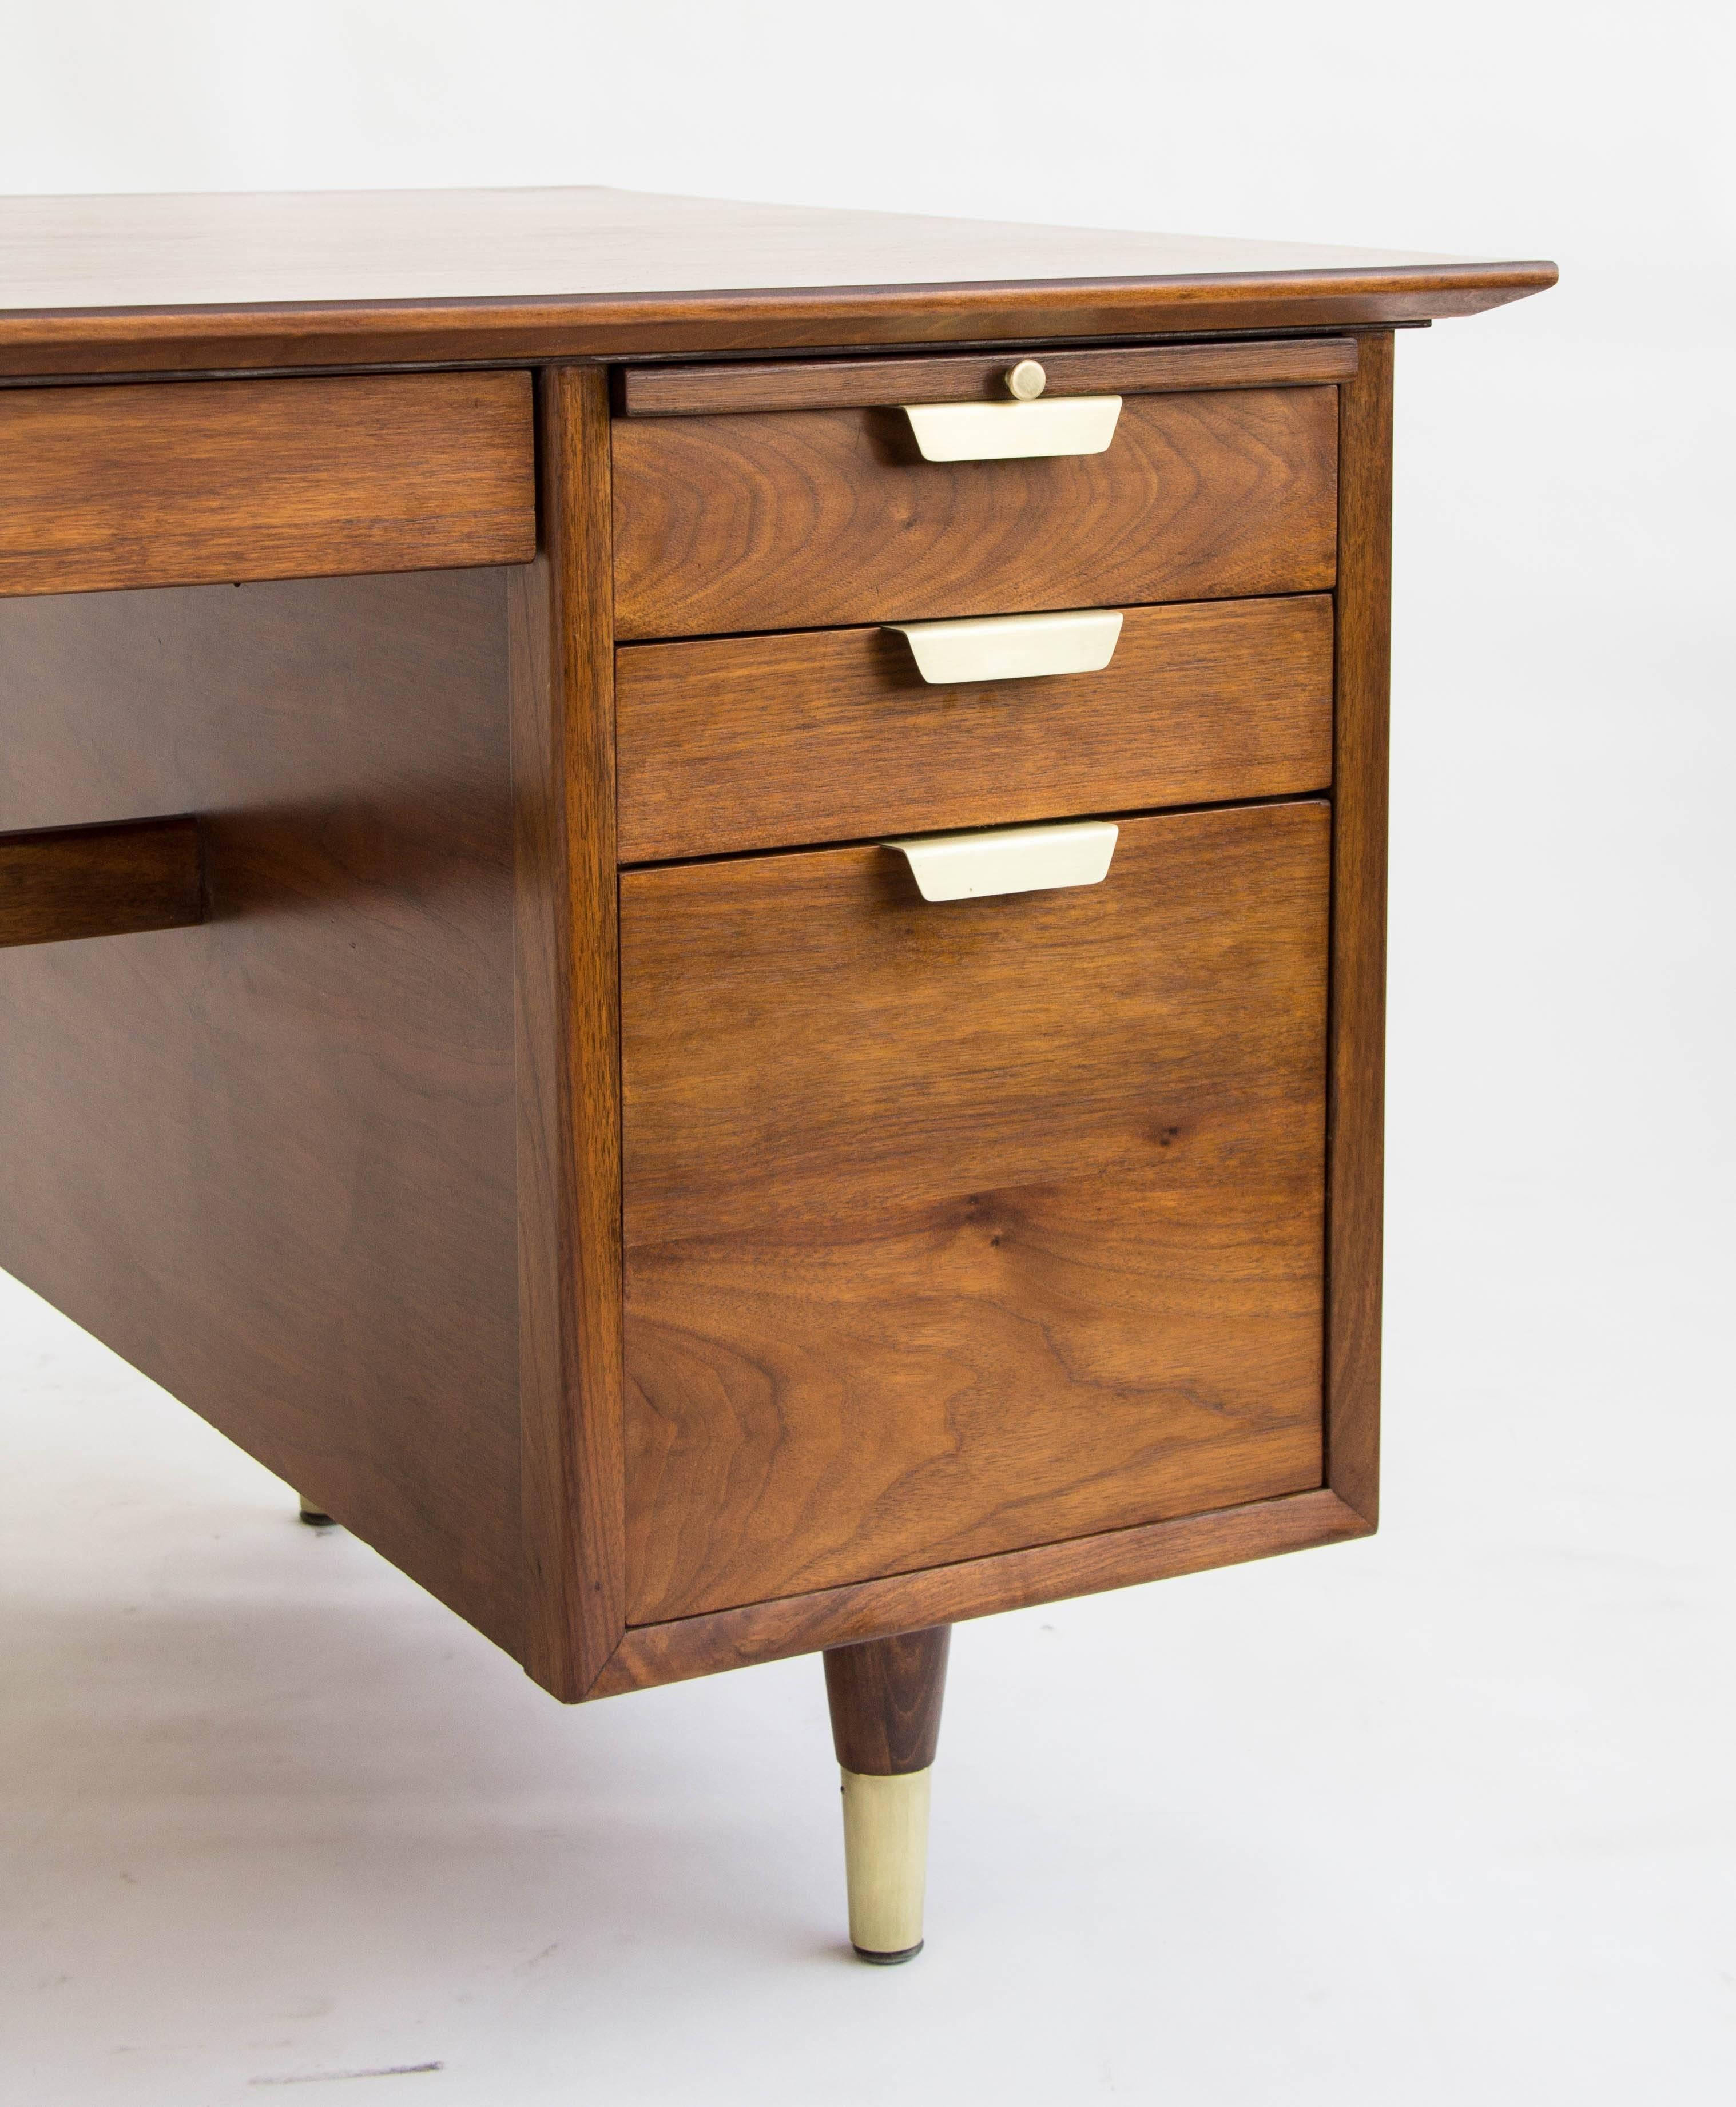 American Walnut Executive Desk by William H. Sullivan for Standard Furniture Company